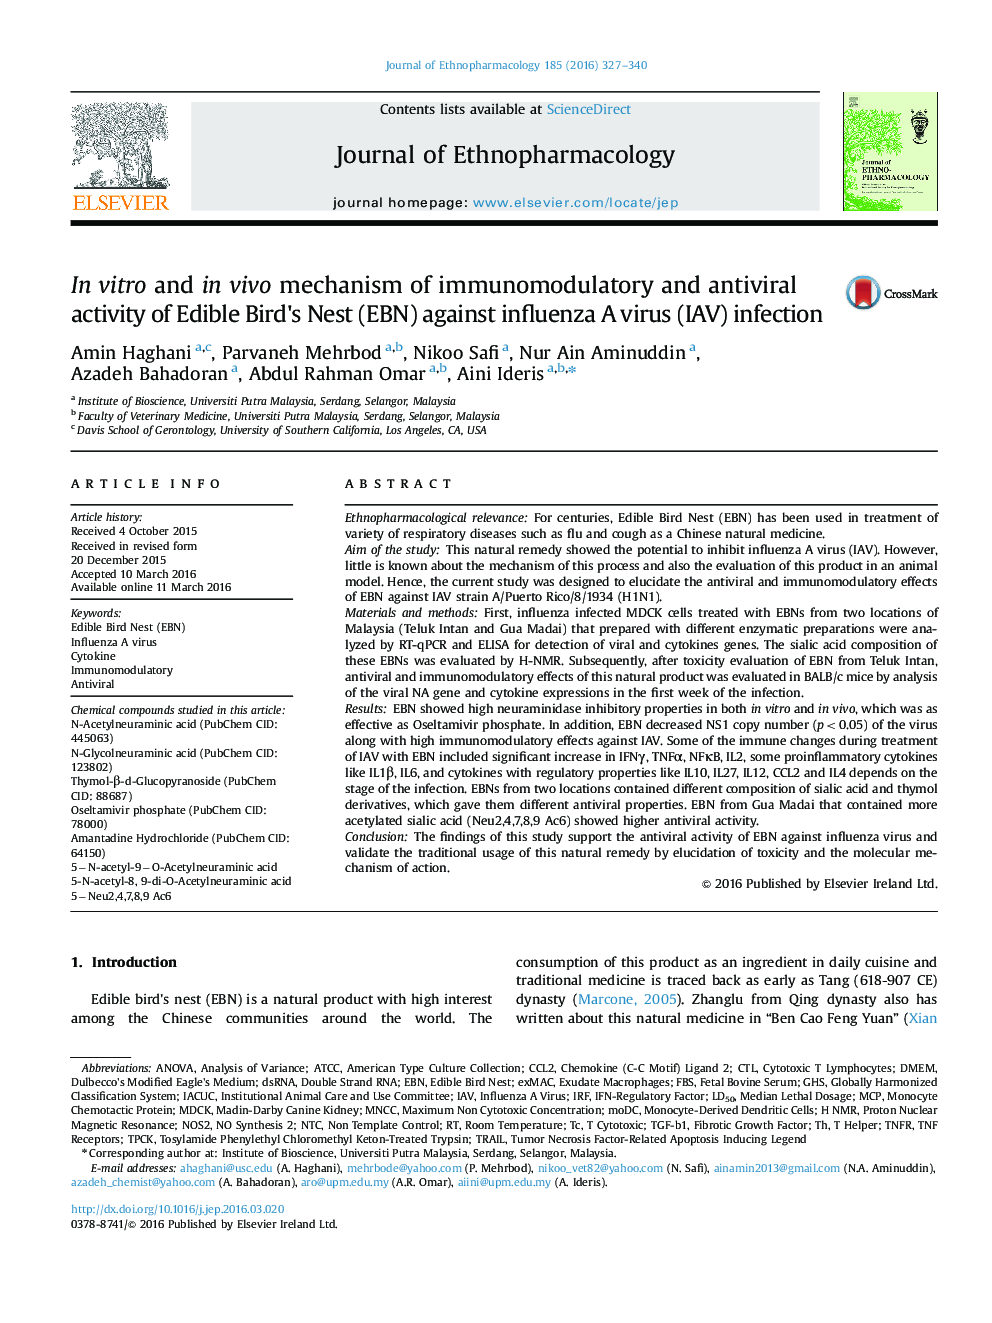 In vitro and in vivo mechanism of immunomodulatory and antiviral activity of Edible Bird's Nest (EBN) against influenza A virus (IAV) infection